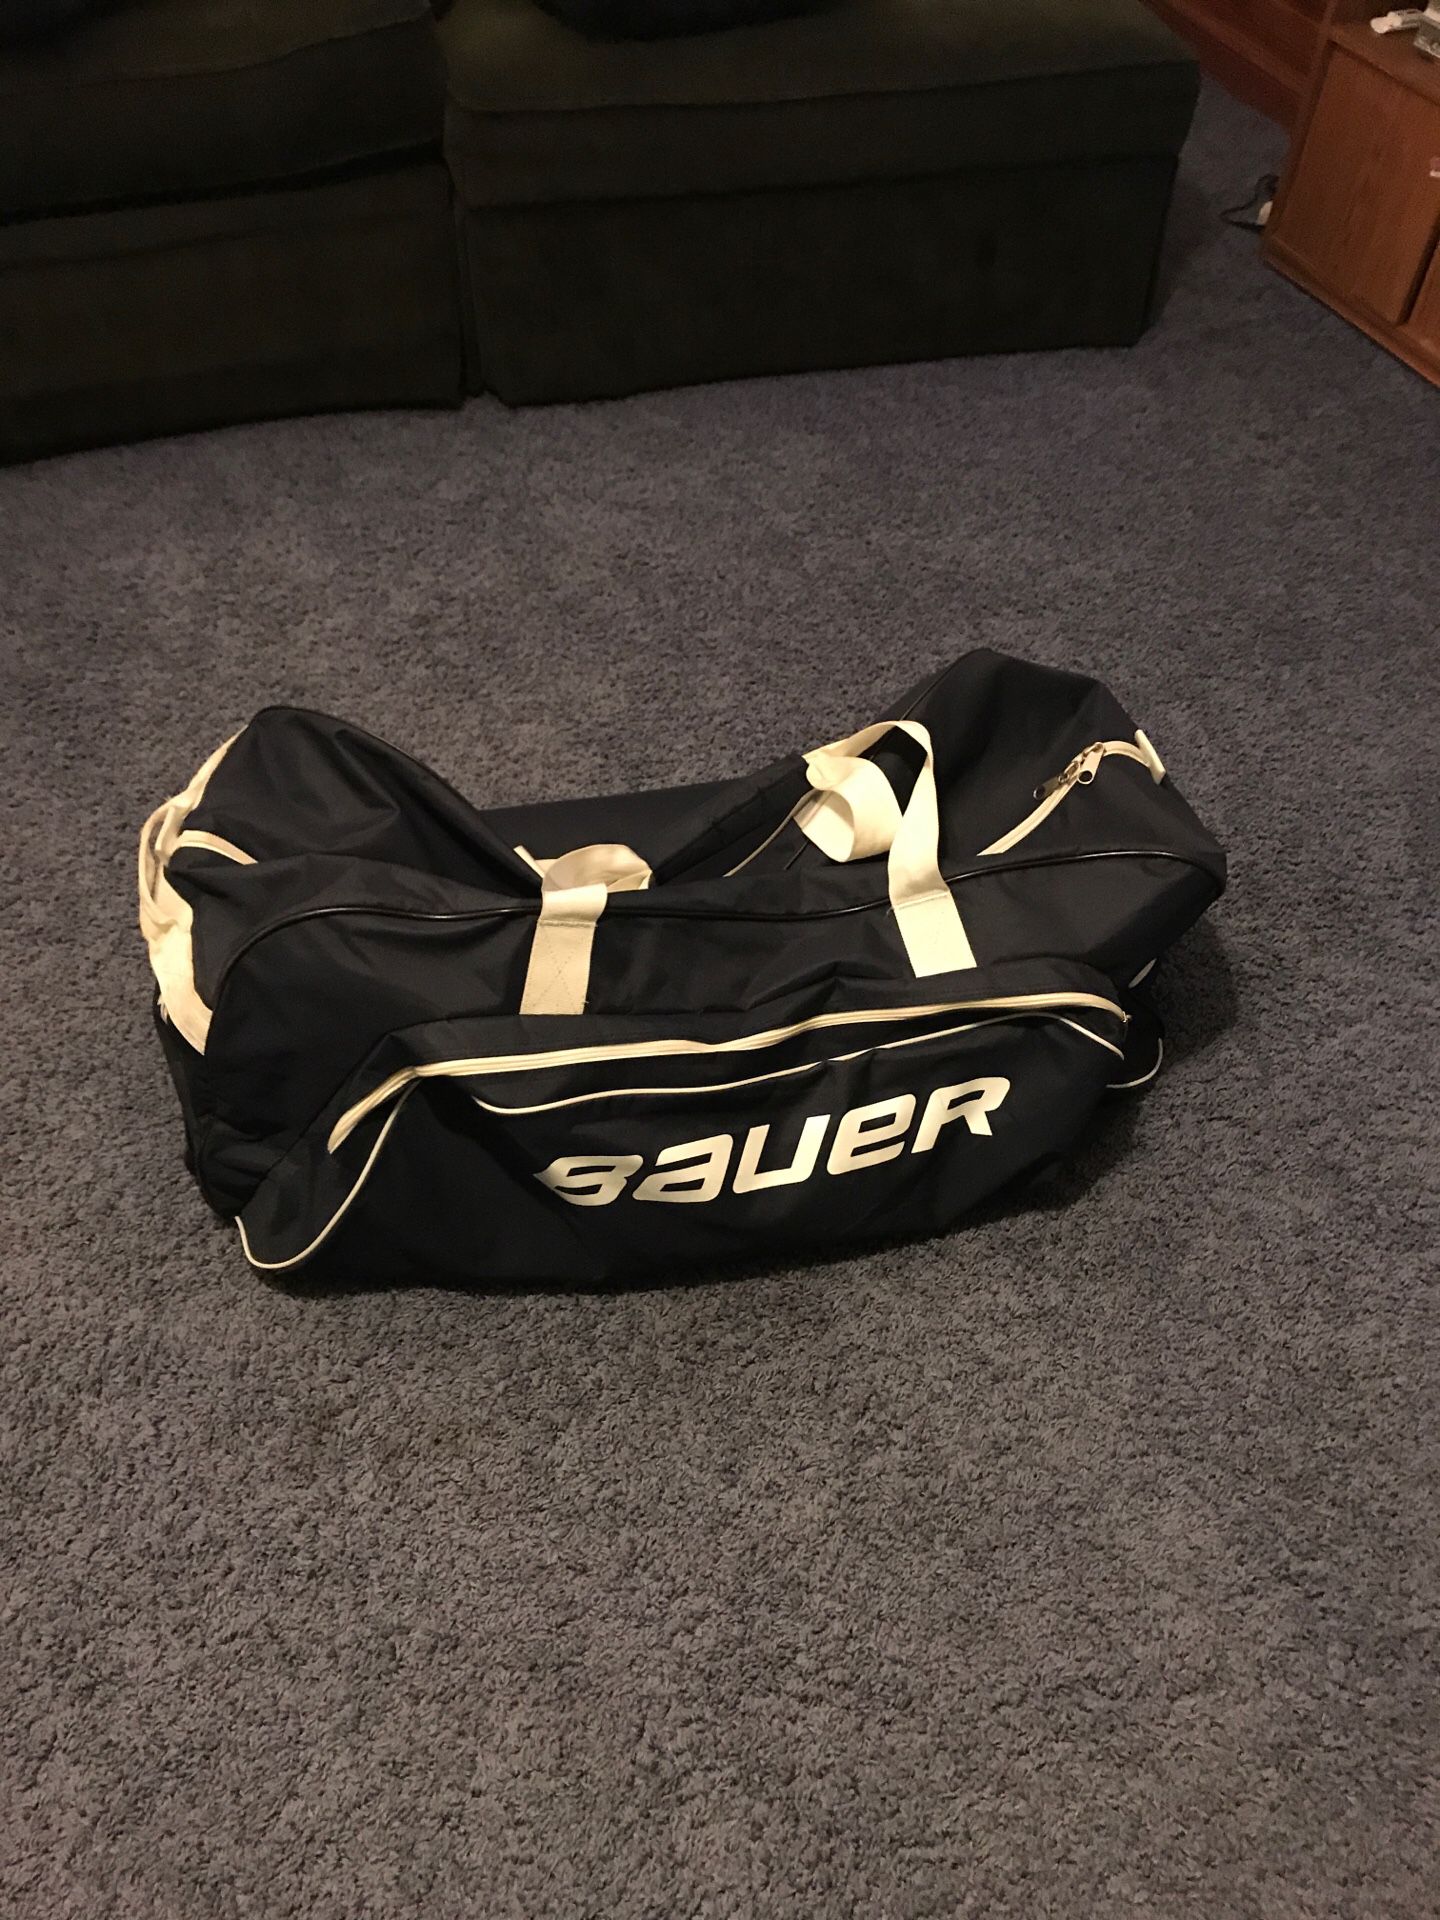 Hockey bag